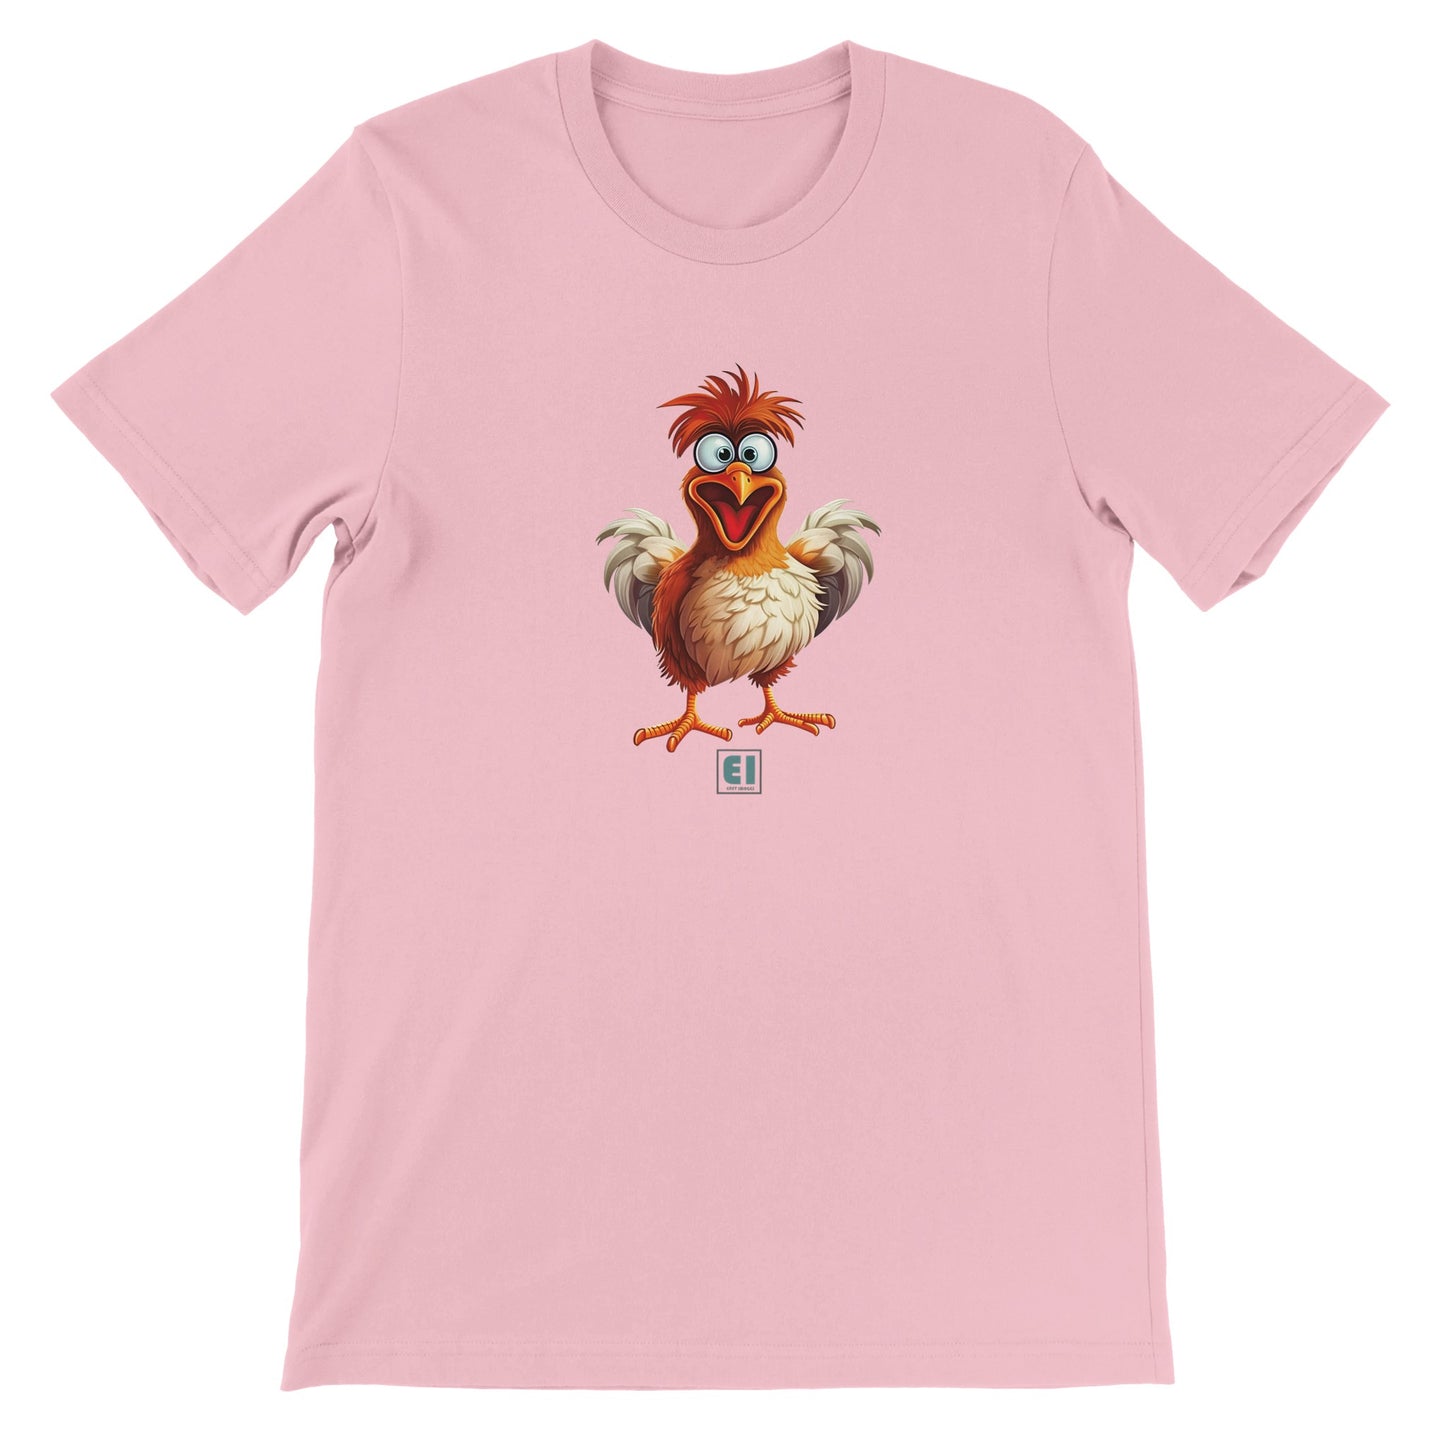 Budget Unisex Crewneck T-shirt/Funny-Chicken